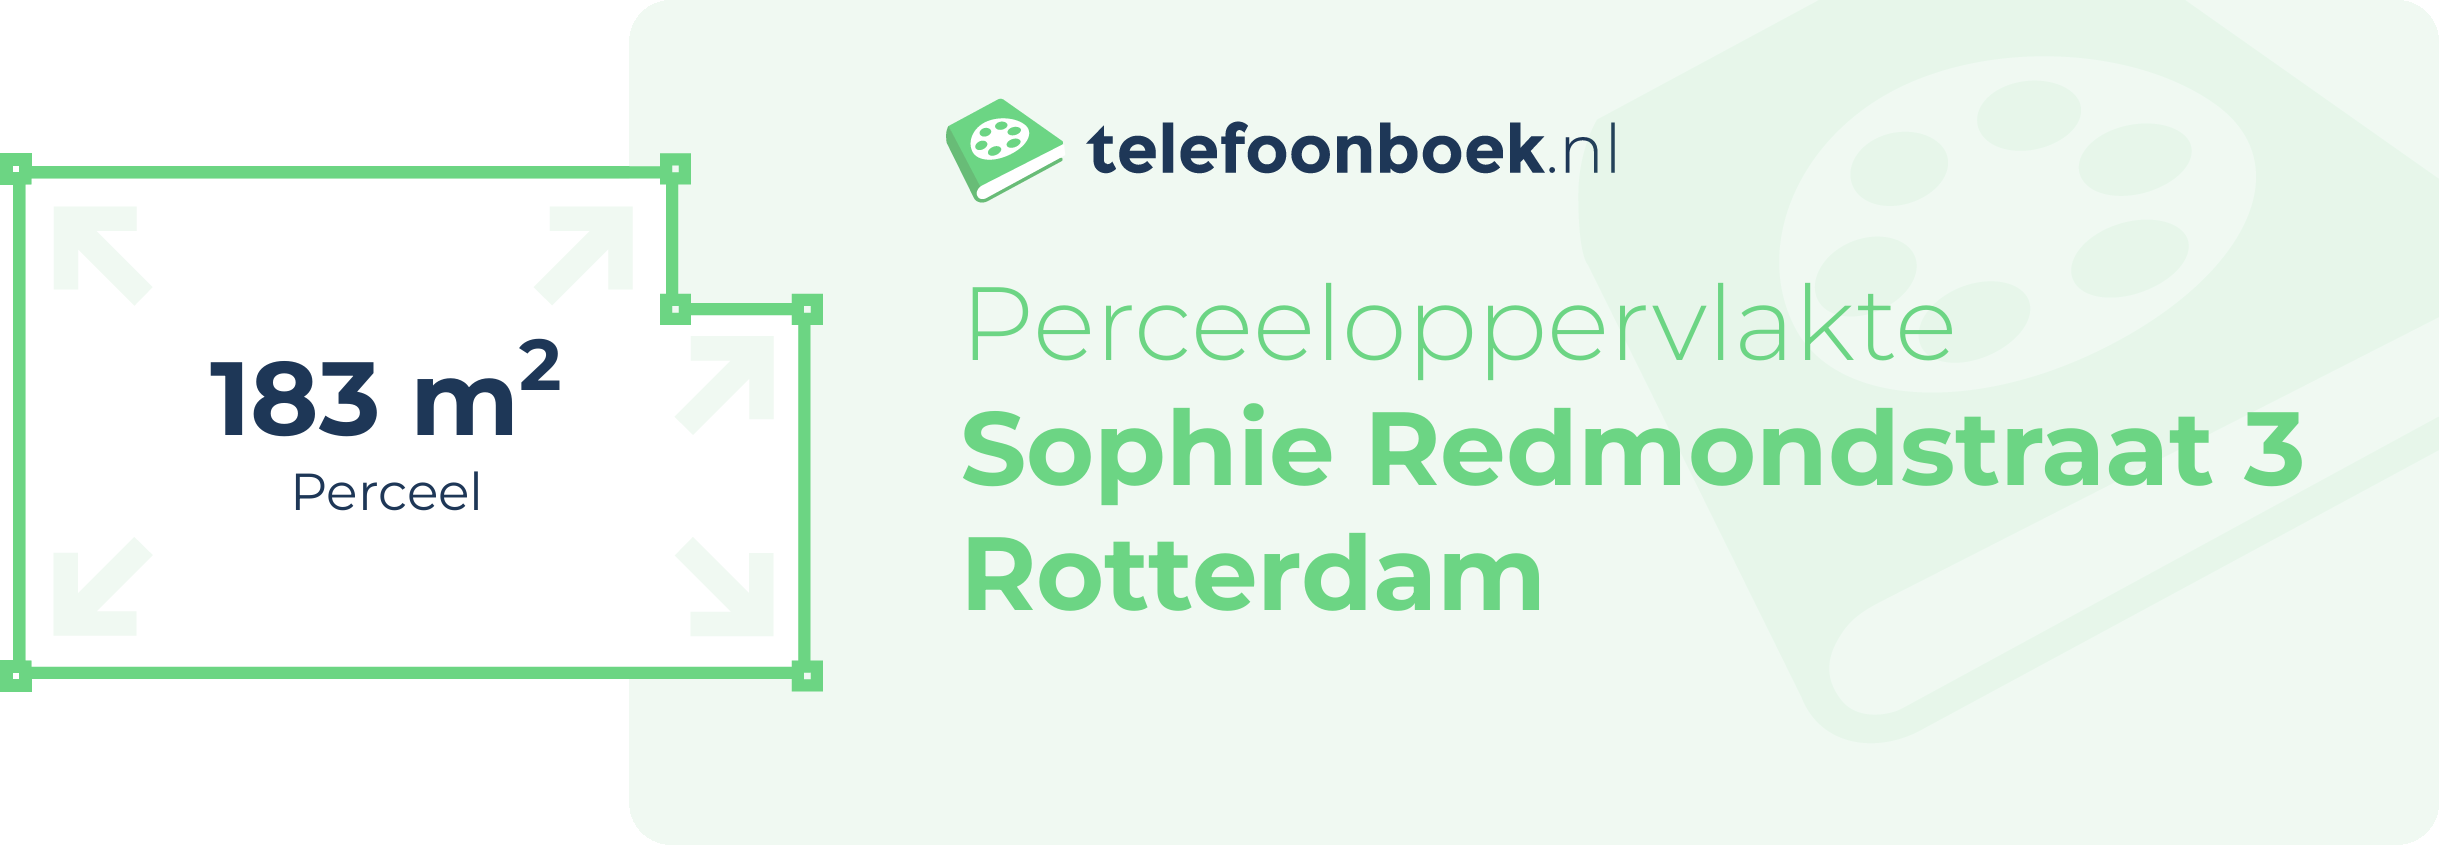 Perceeloppervlakte Sophie Redmondstraat 3 Rotterdam